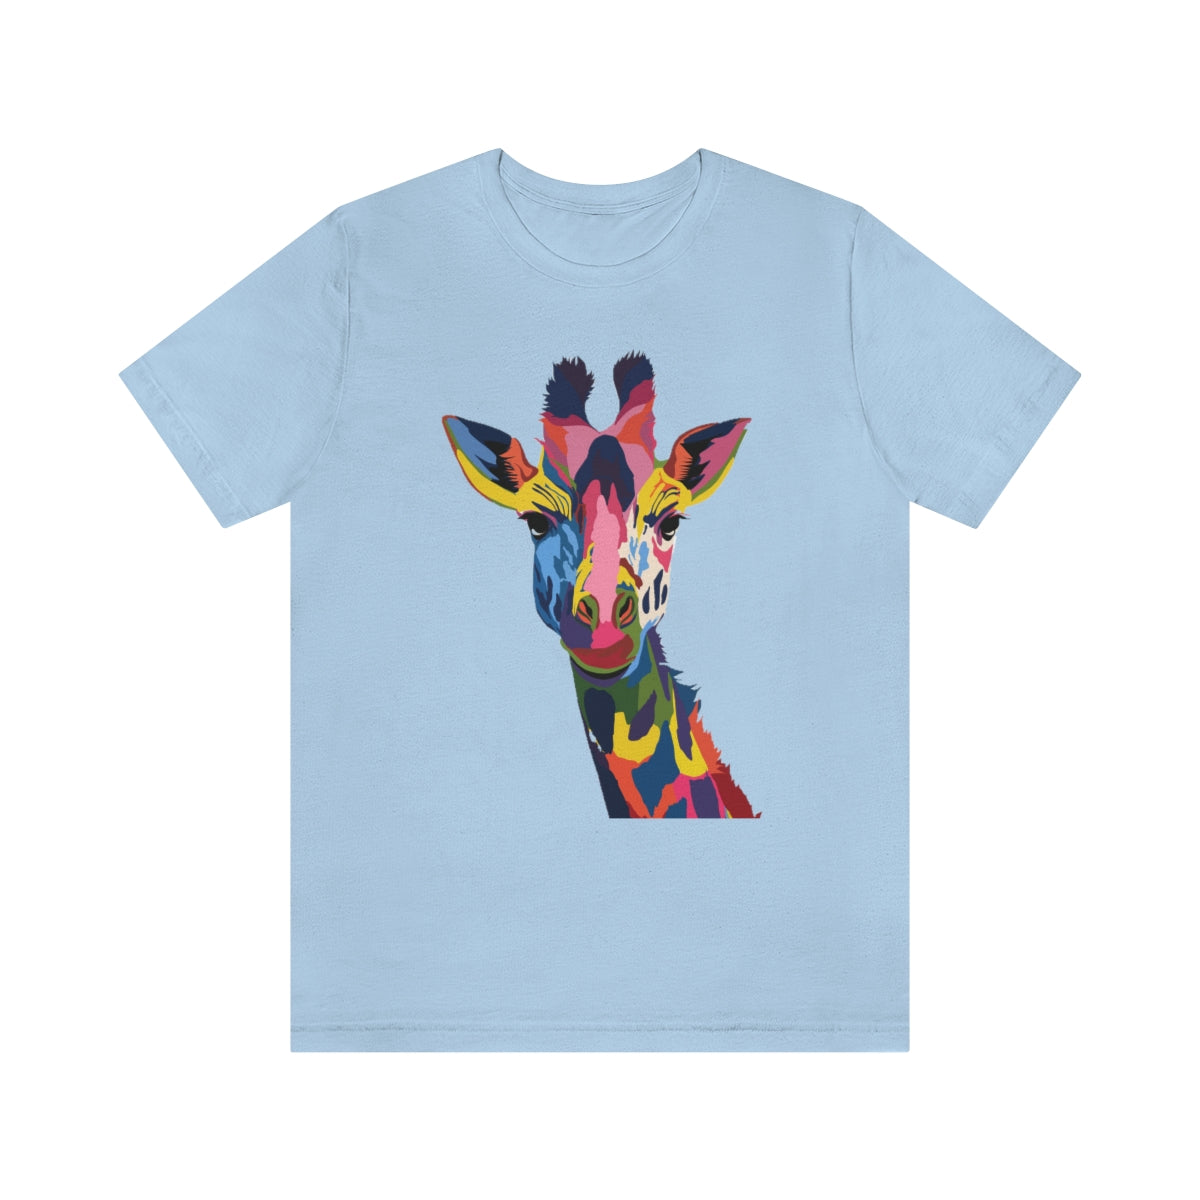 Unisex Jersey Short Sleeve Tee "Watercolor Colorful Giraffe"